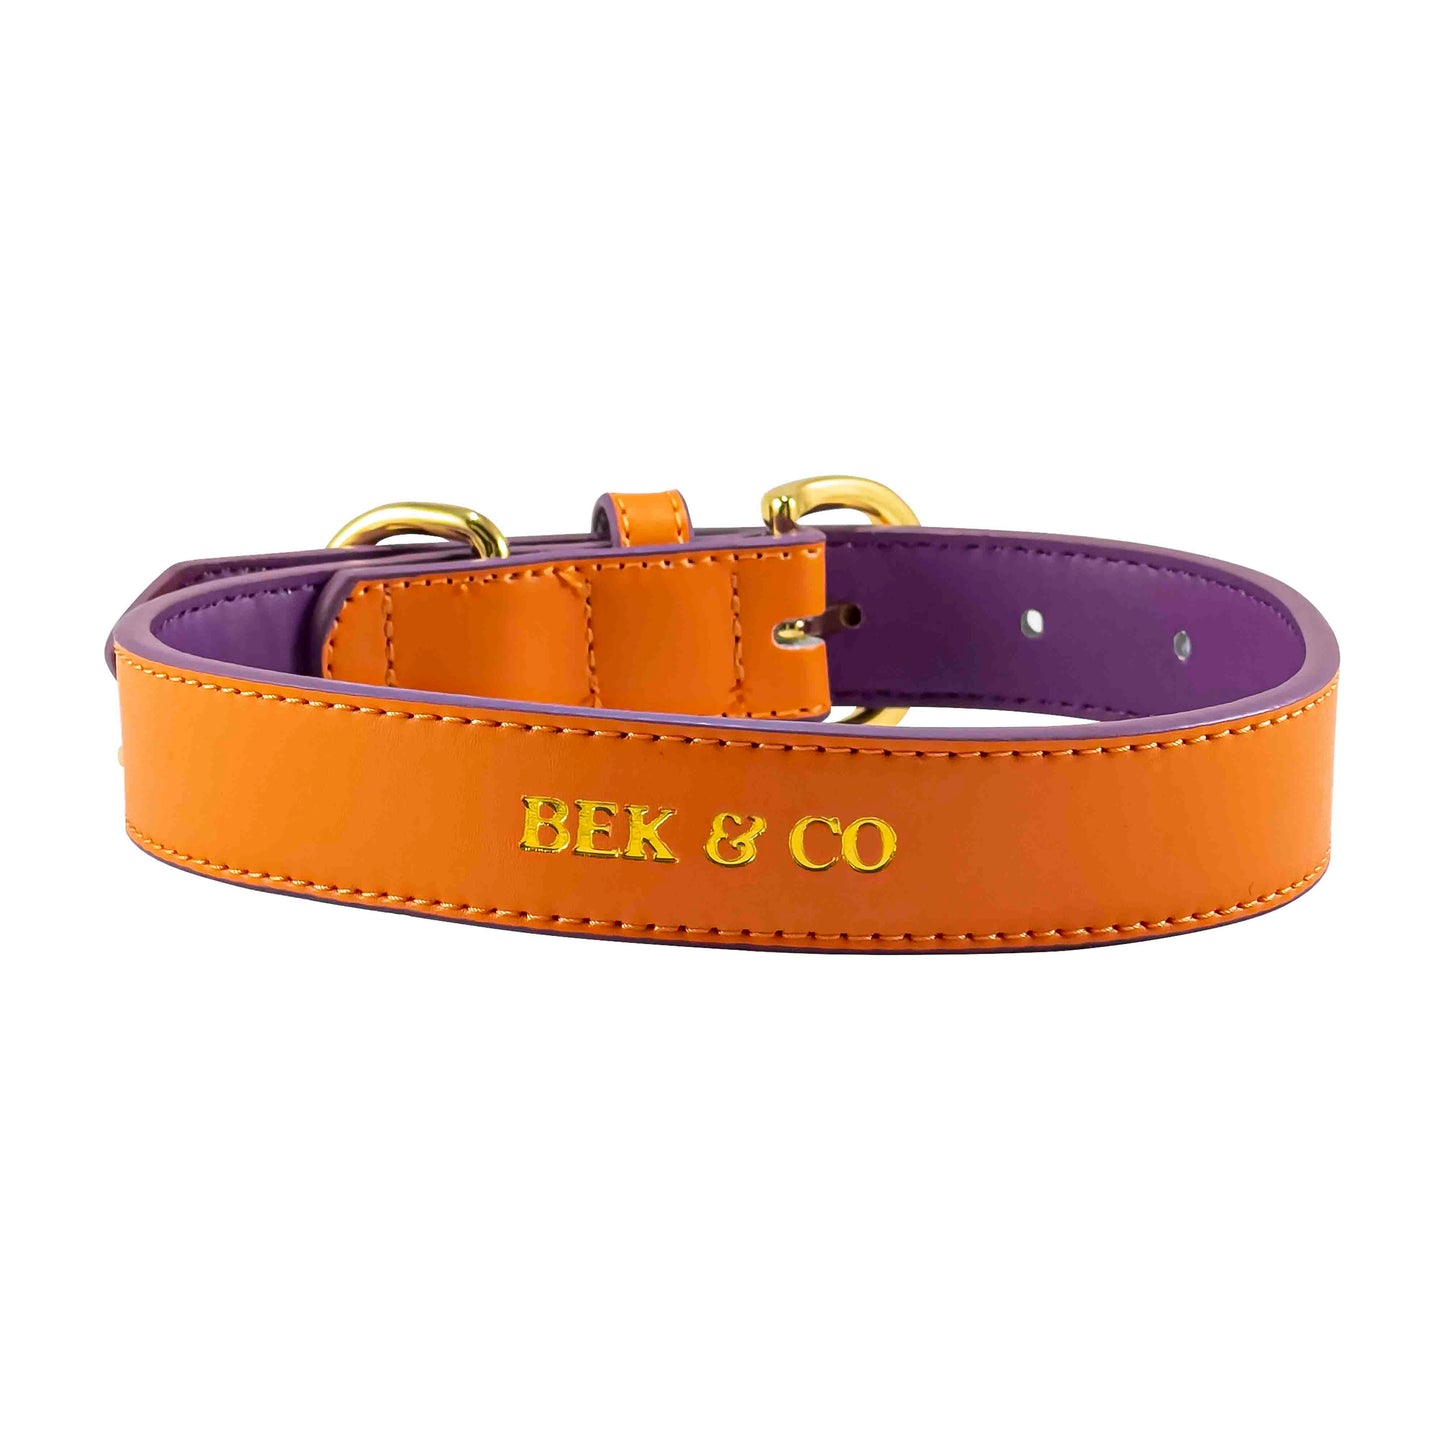 Bek & Co Regal Orange Leather French Bulldog collar on white background showing embossed logo